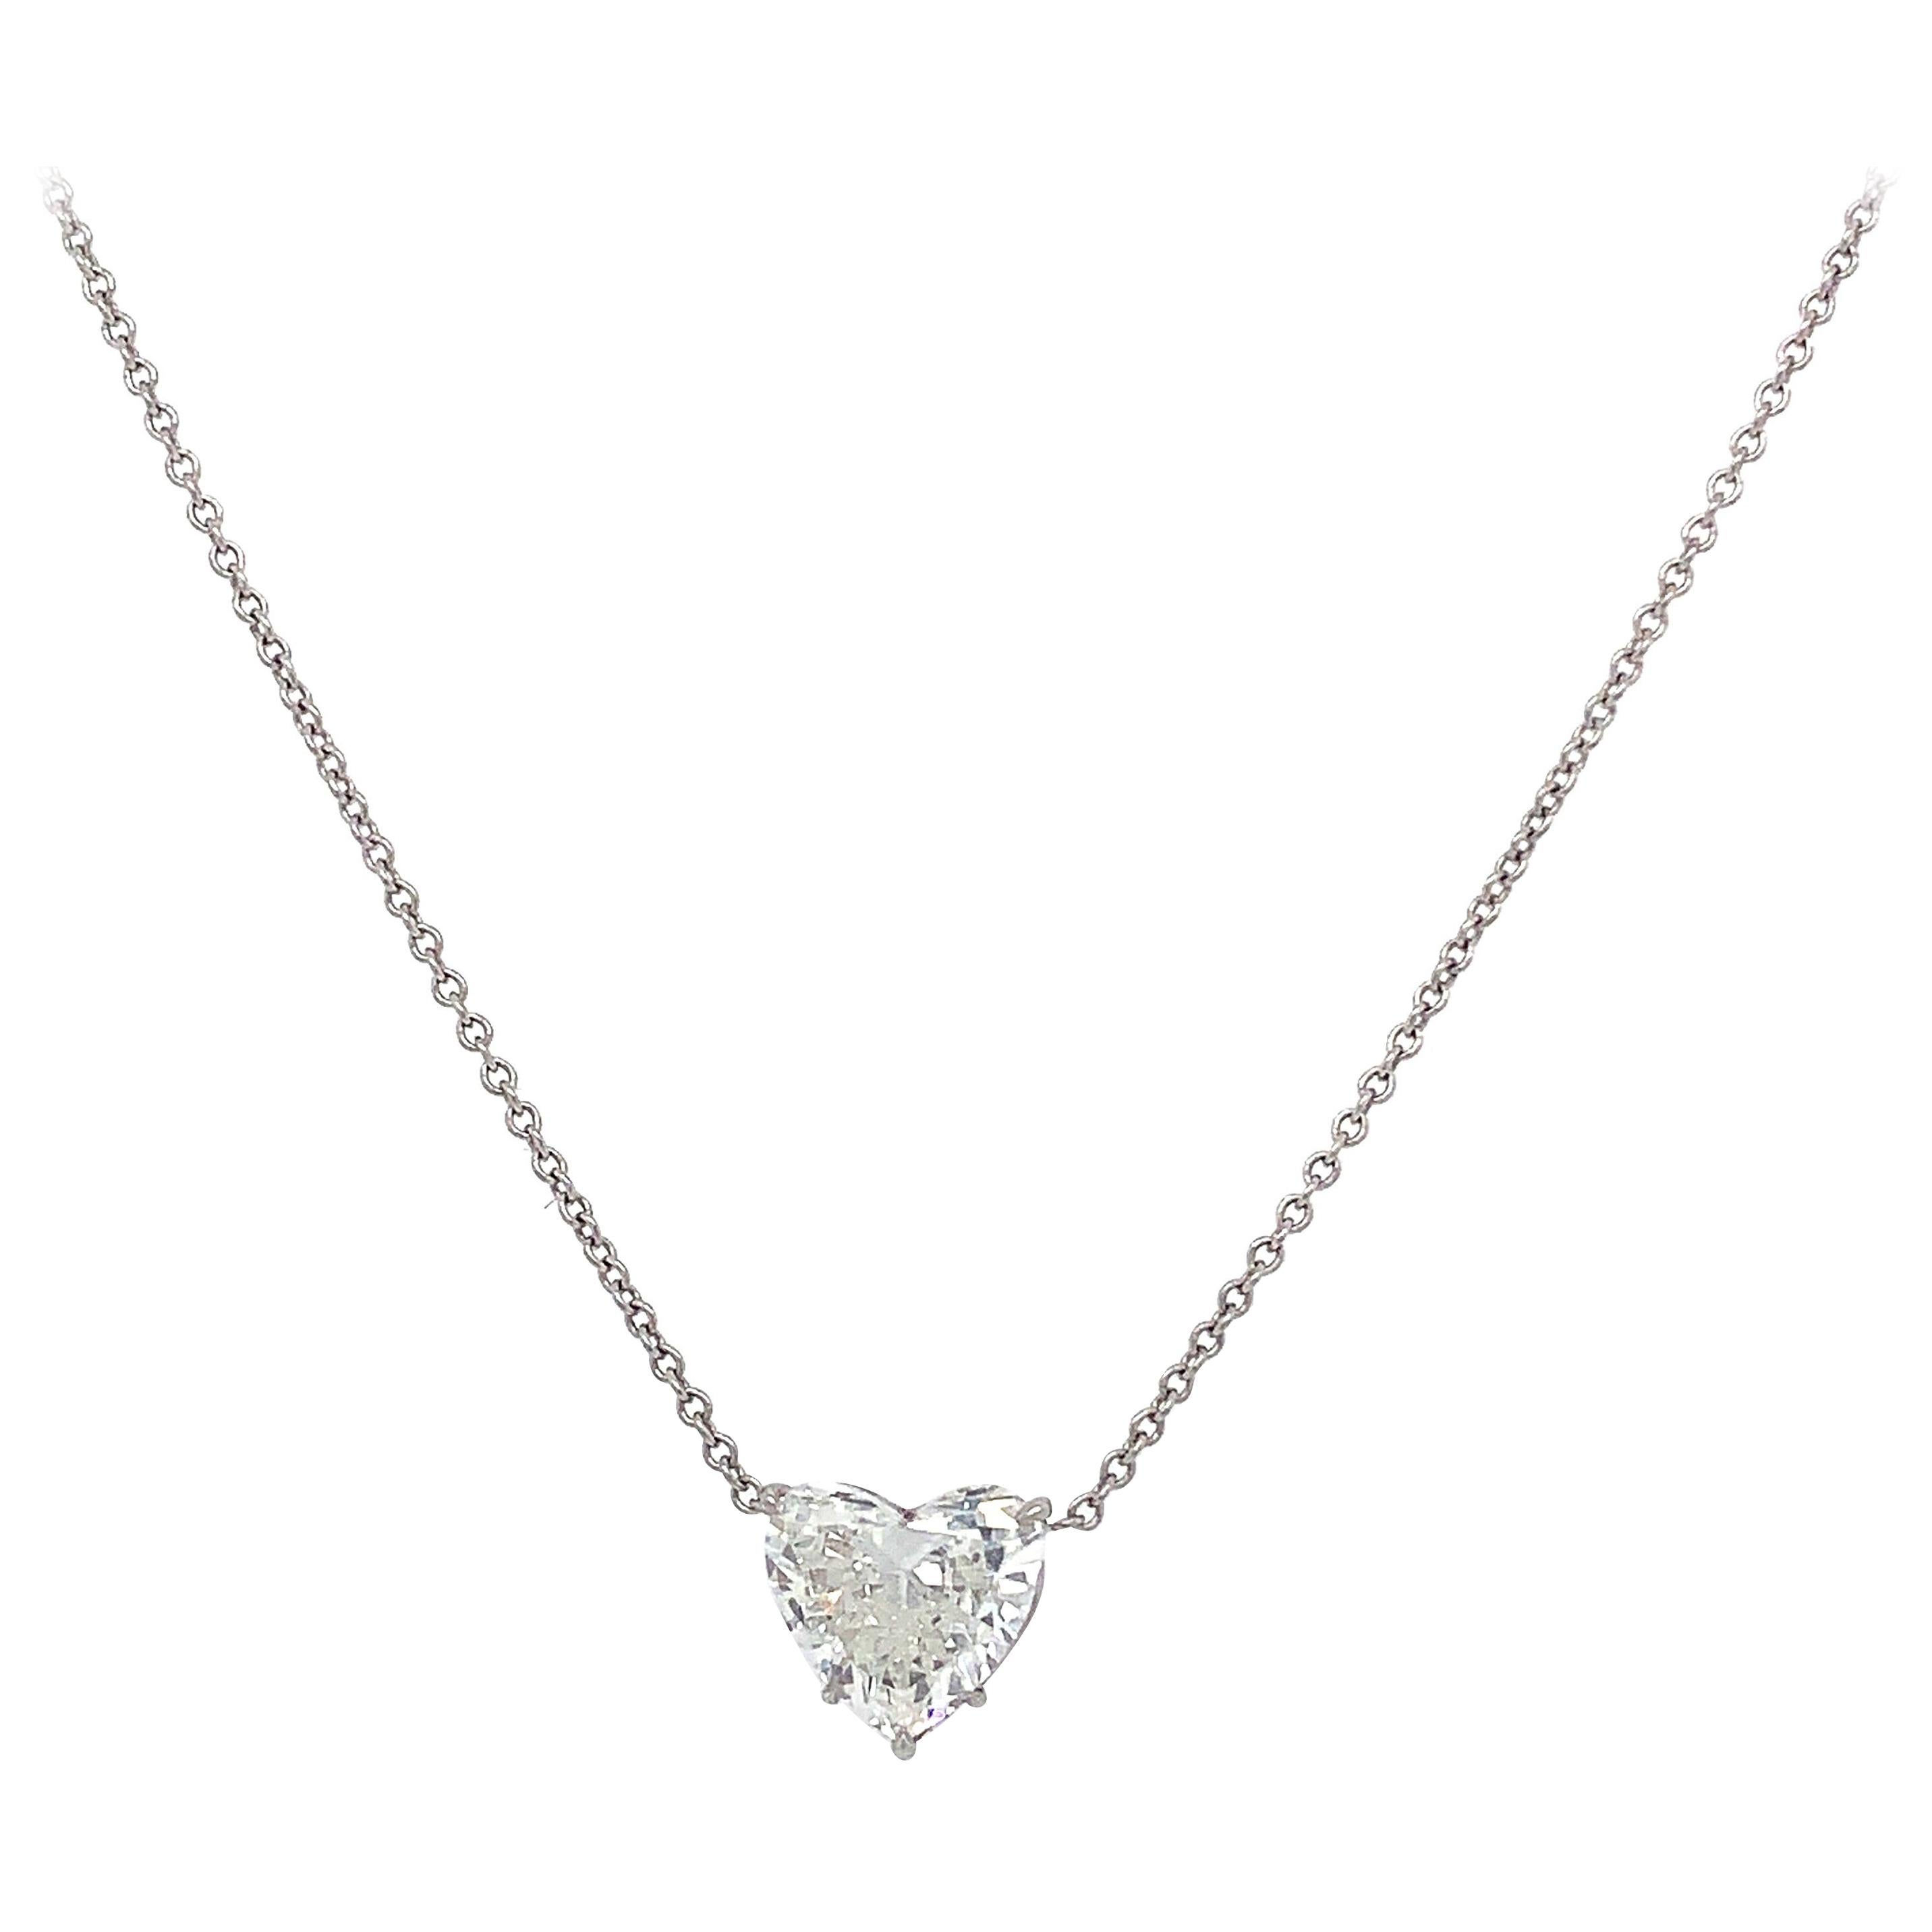 ISSAC NUSSBAUM NEW YORK 1.50 Carat Heart Shape Diamond Pendant Necklace  For Sale